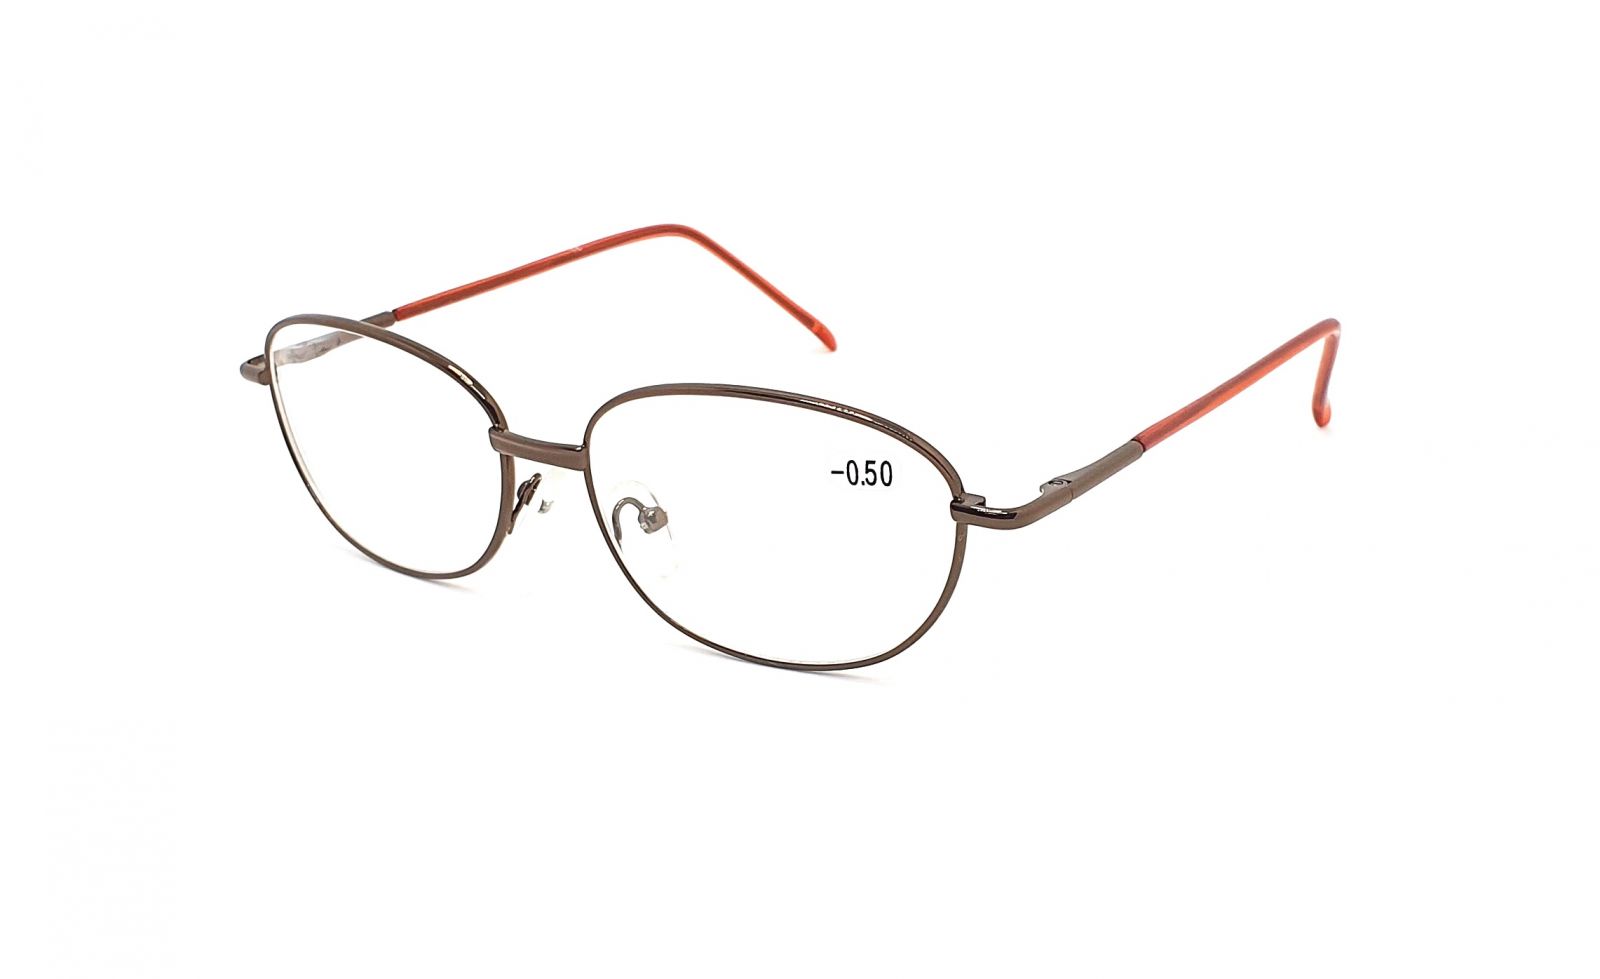 Dioptrické brýle M1001 / -0,50 grey/brown flex